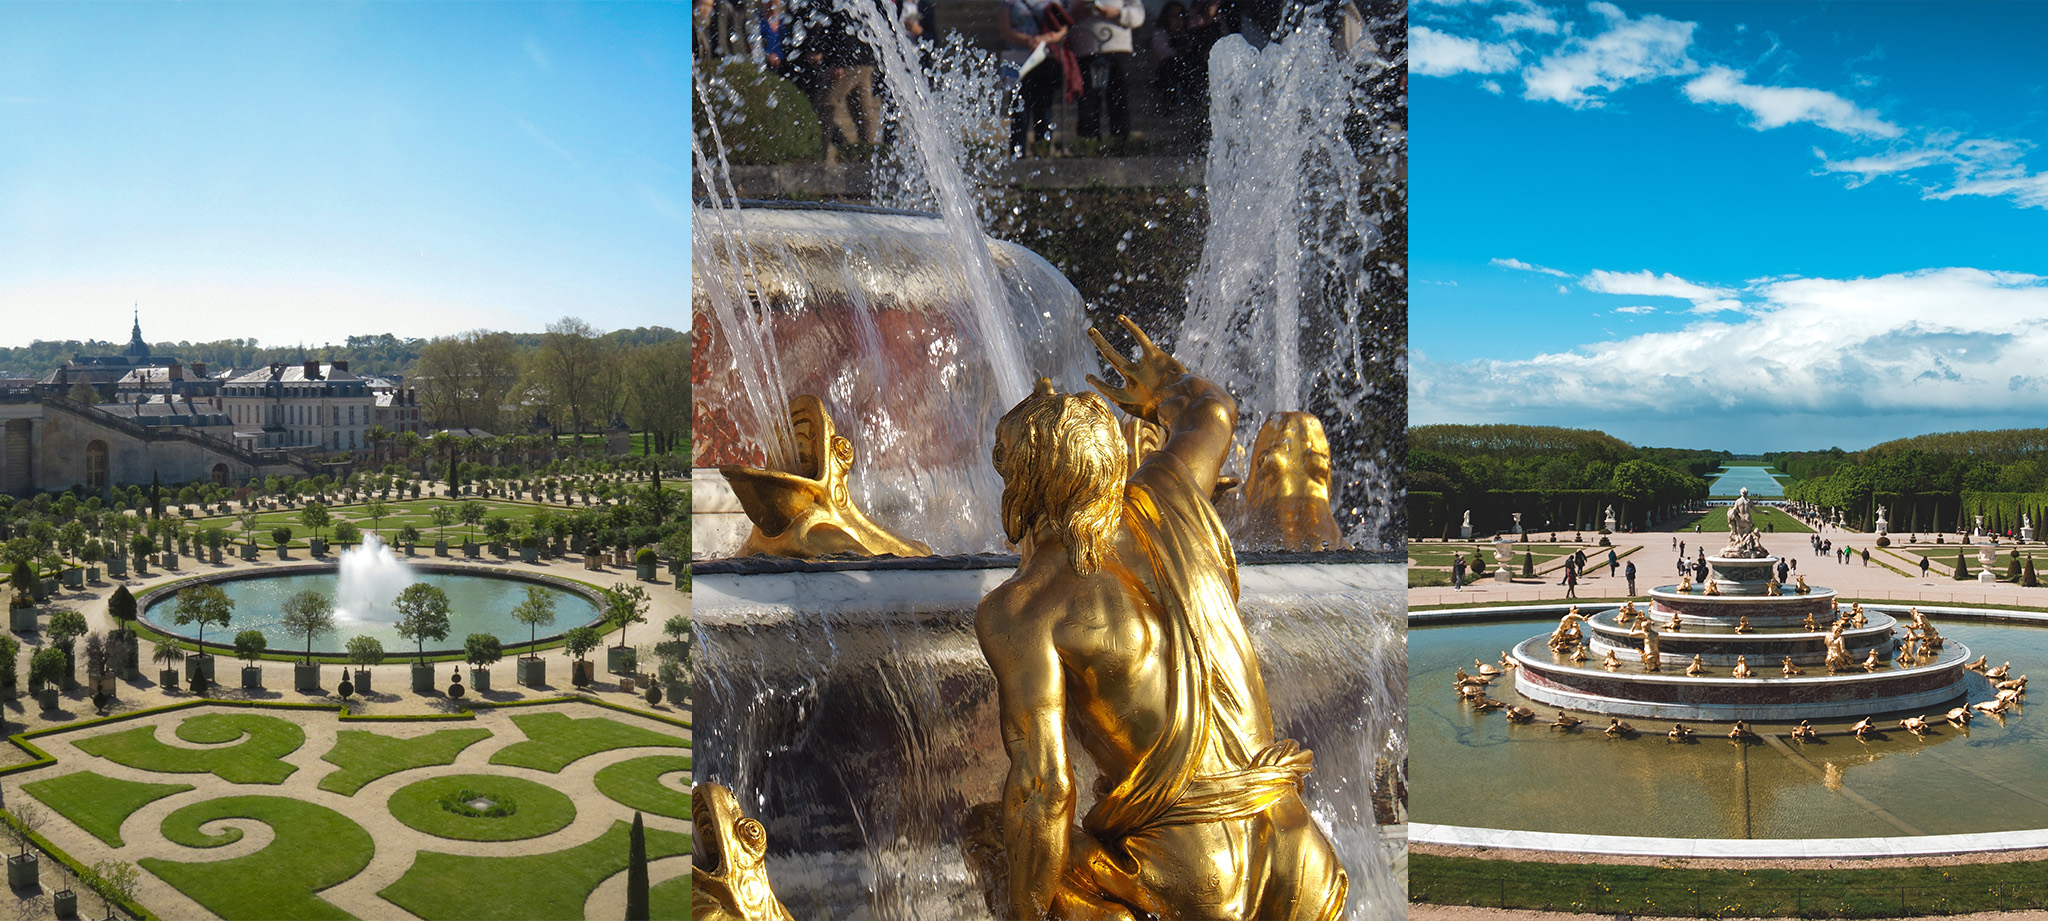 fountains and bassins of versailles fountaines-de-versailles-fountains-at-versailles-©hugo-herrara-rafael-garcin-jo-kassis-blog